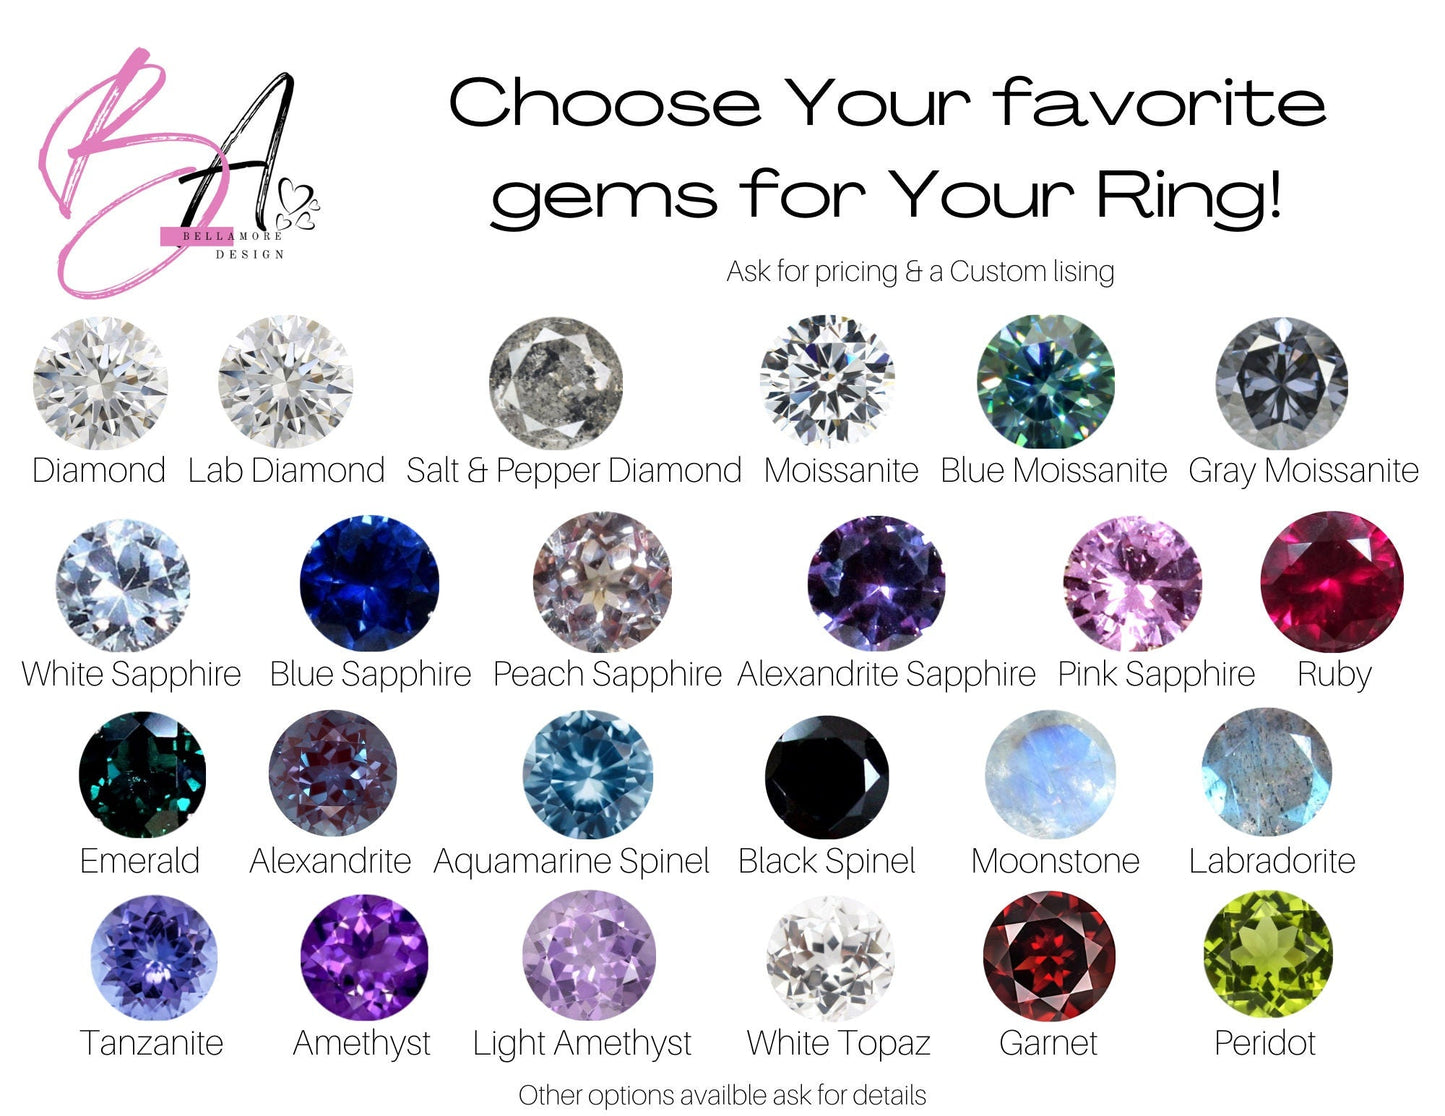 2ct Hemera 8x6mm Yellow Sapphire Engagement Ring & Diamond Emerald Cut Halo BellaMoreDesign.com